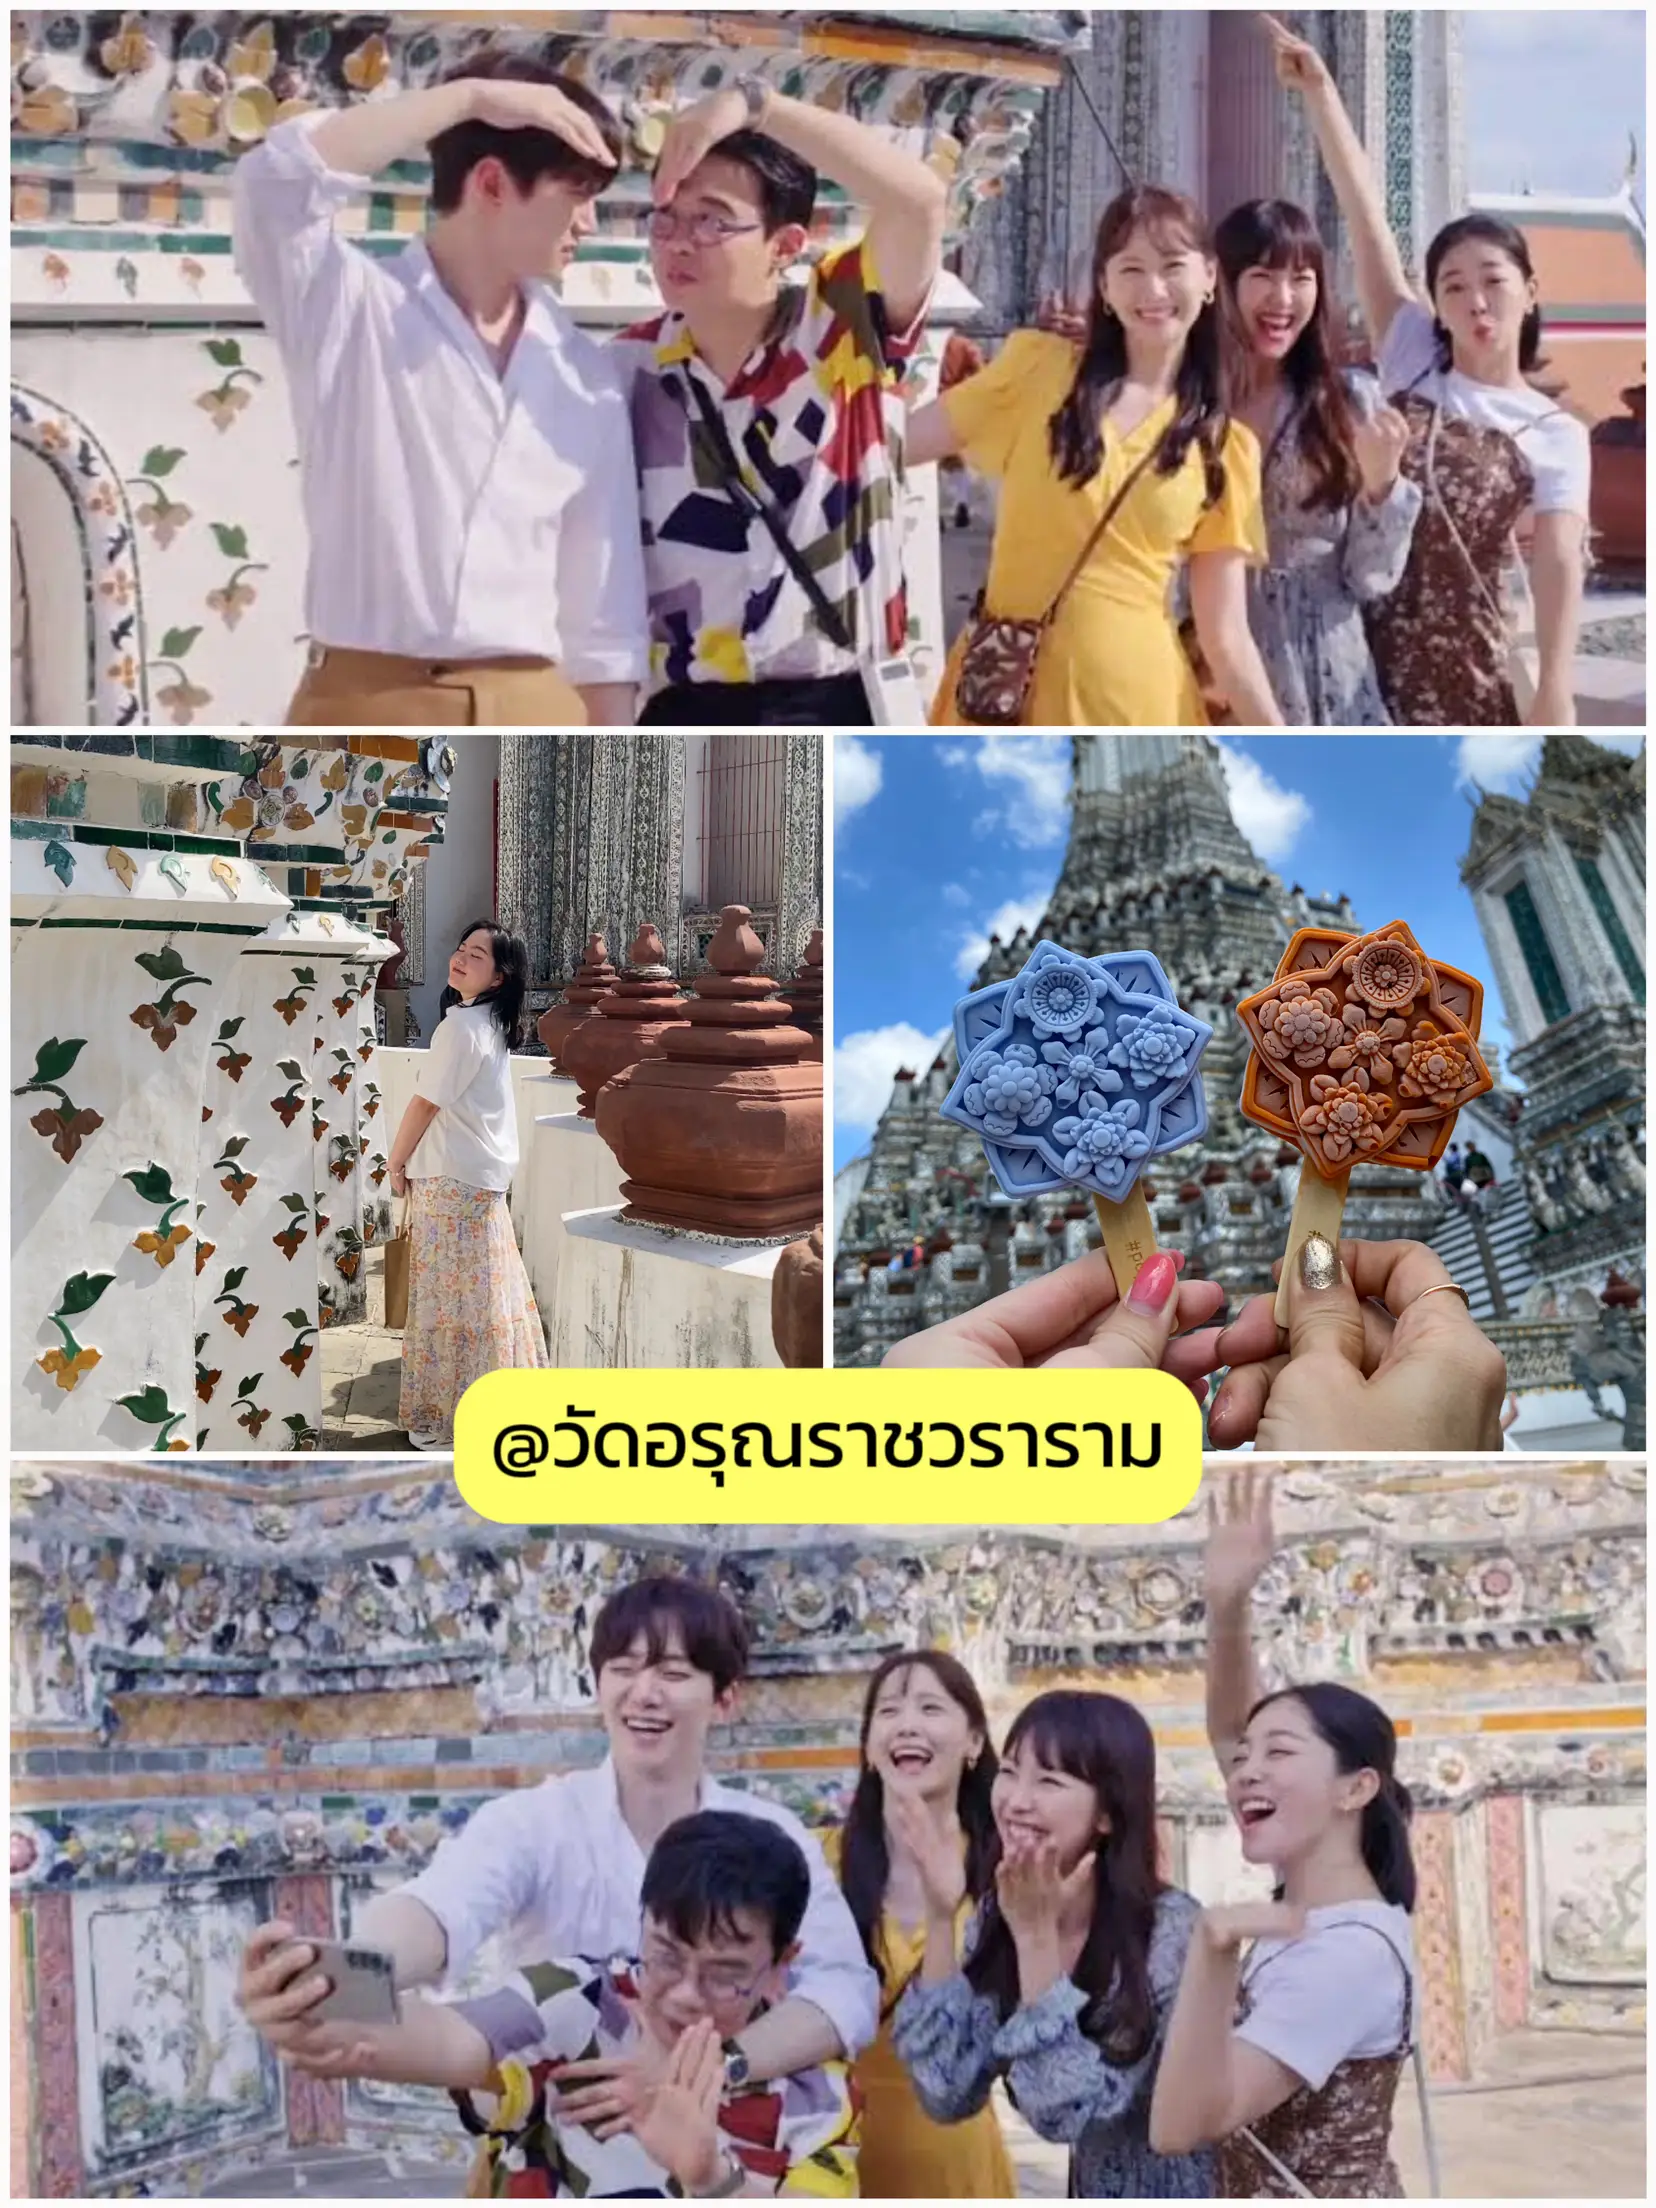 Where did the Korean drama “King the Land” film in Thailand?